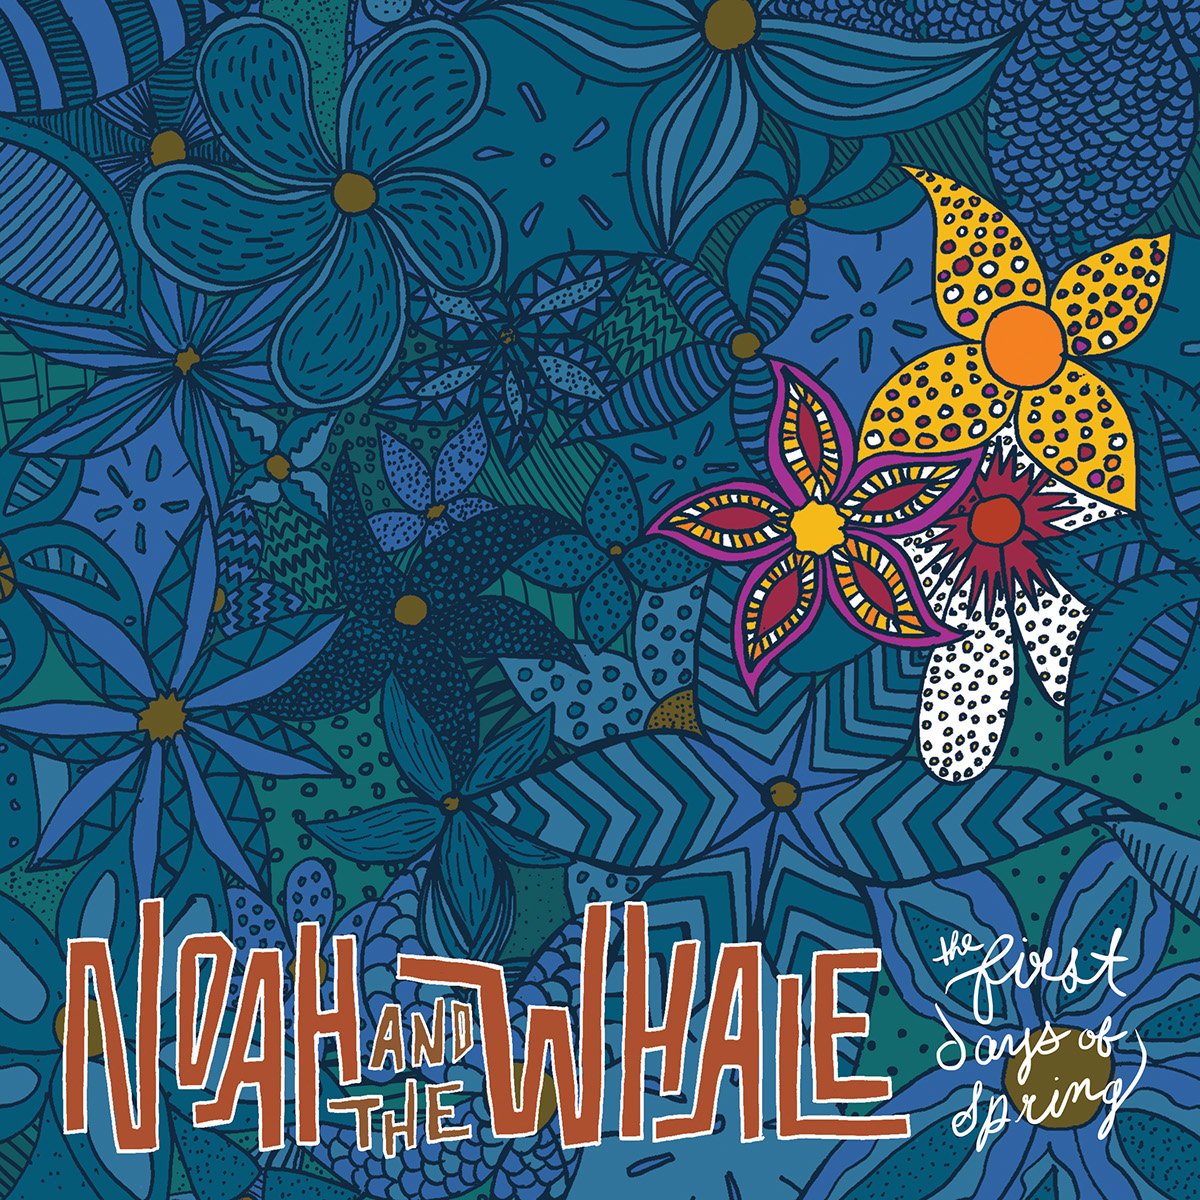 Noah and the Whale noah whale spring album art record sleeve Flowers noah folk pratt Pratt Institute gerbino michael gerbino pratt comd